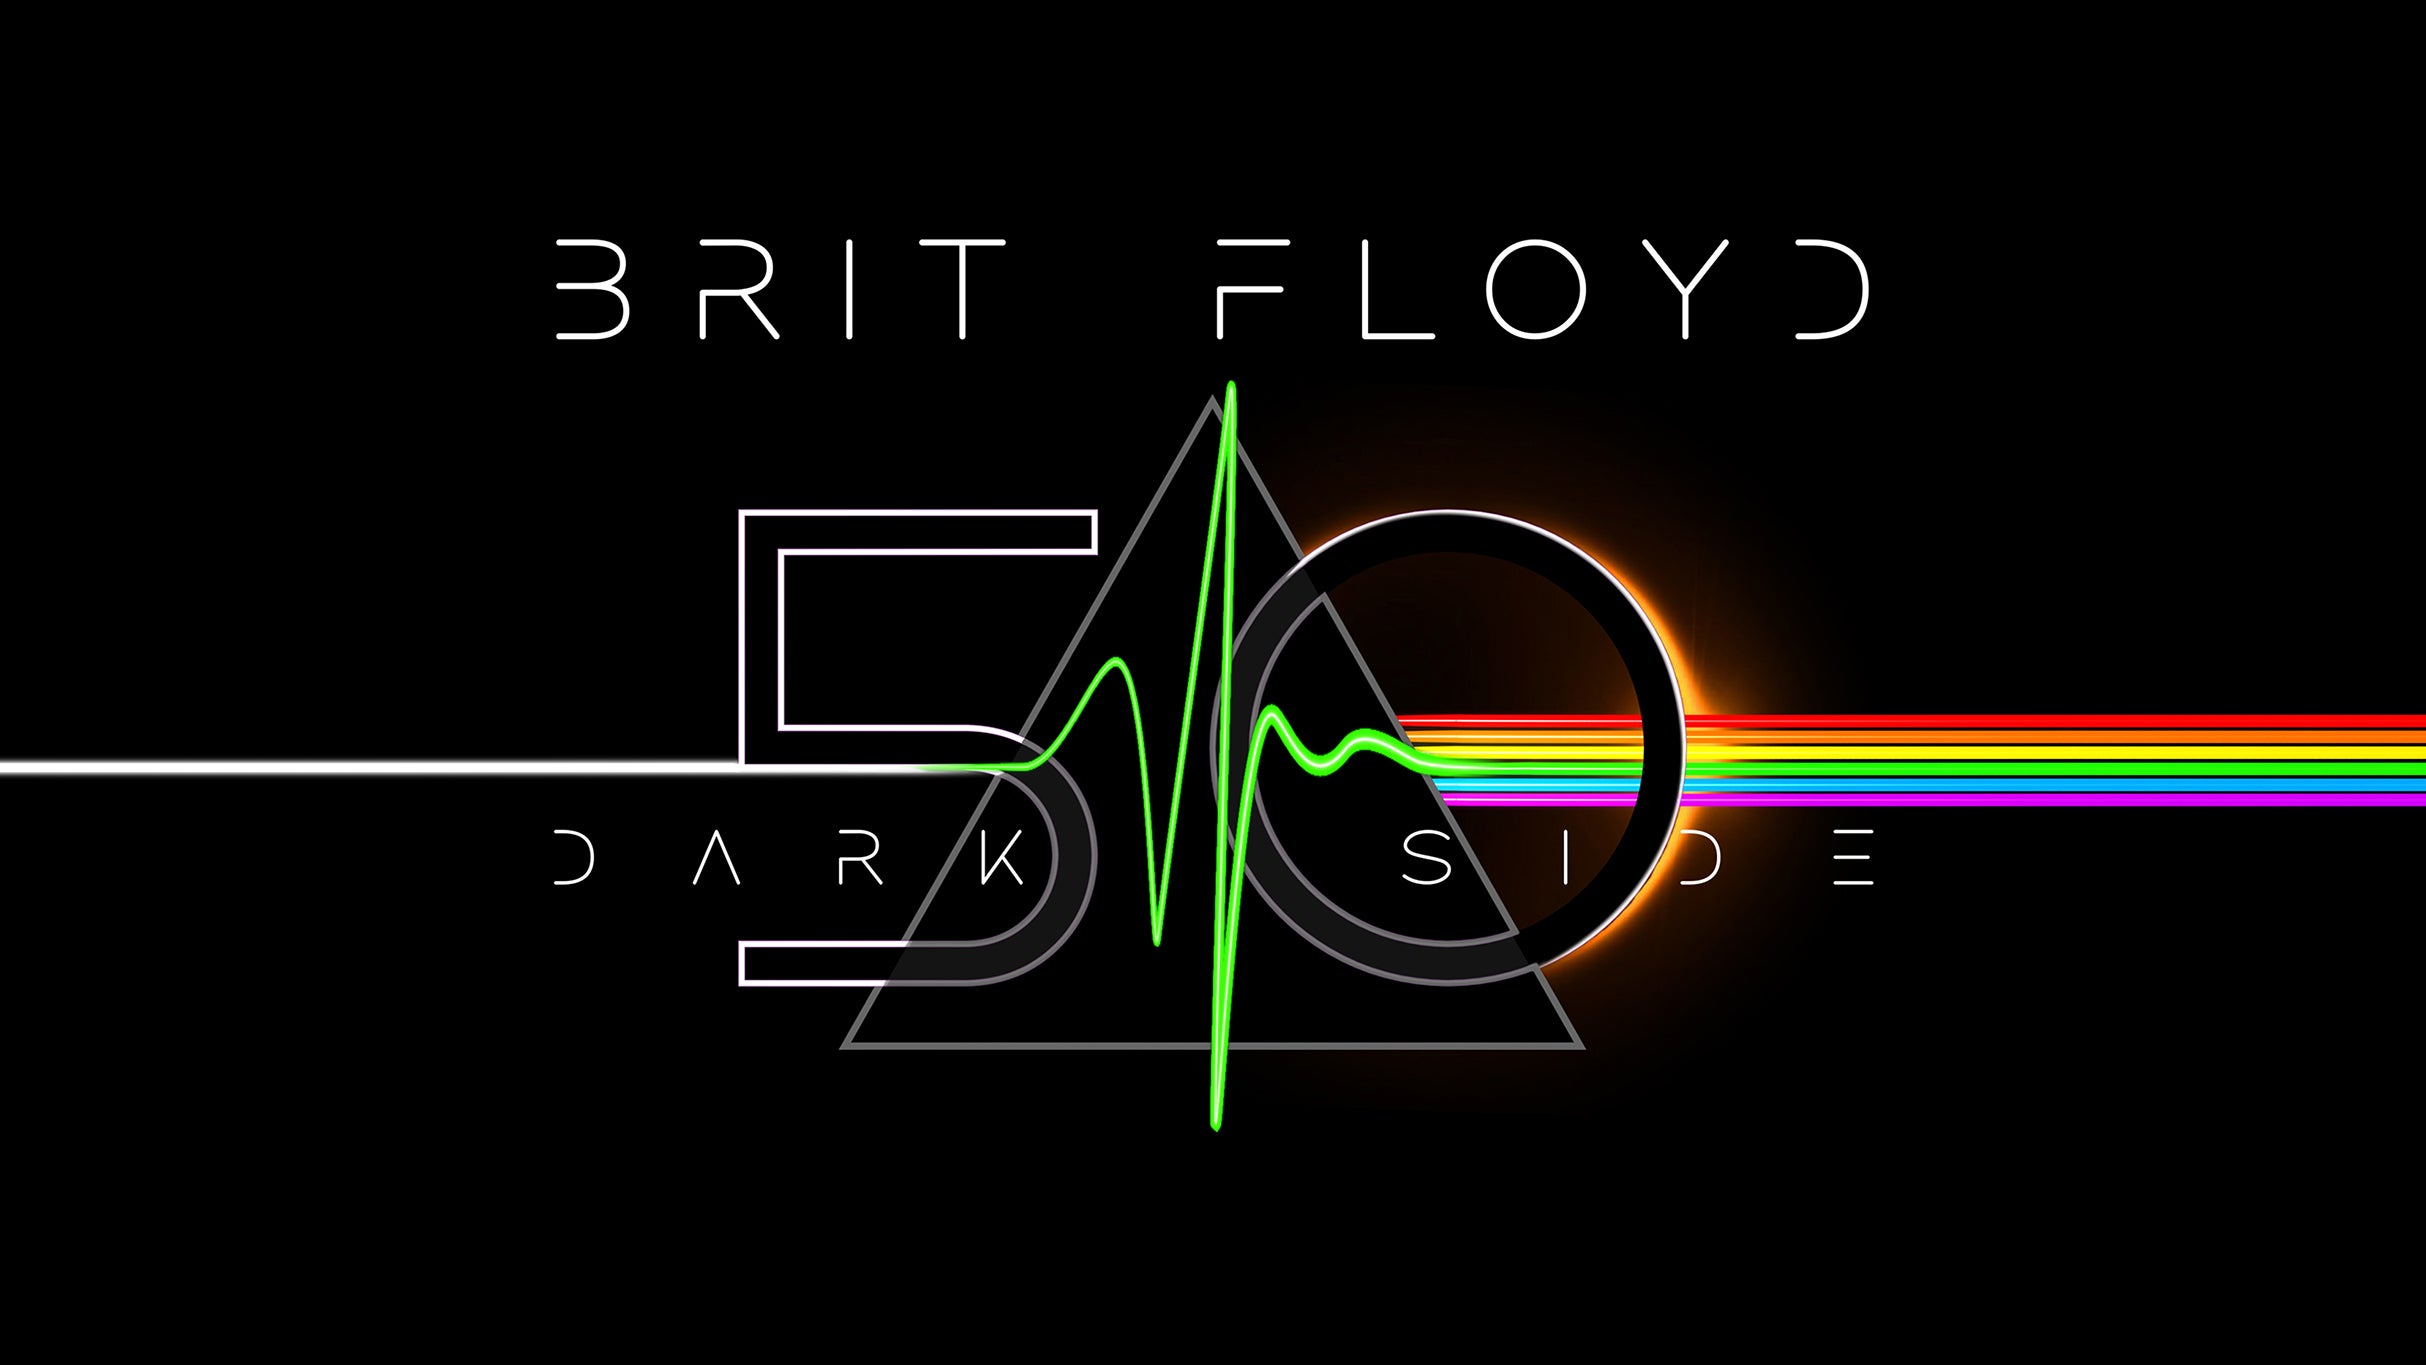 Brit Floyd free presale code for performance tickets in Daytona Beach, FL (The Peabody Daytona Beach)